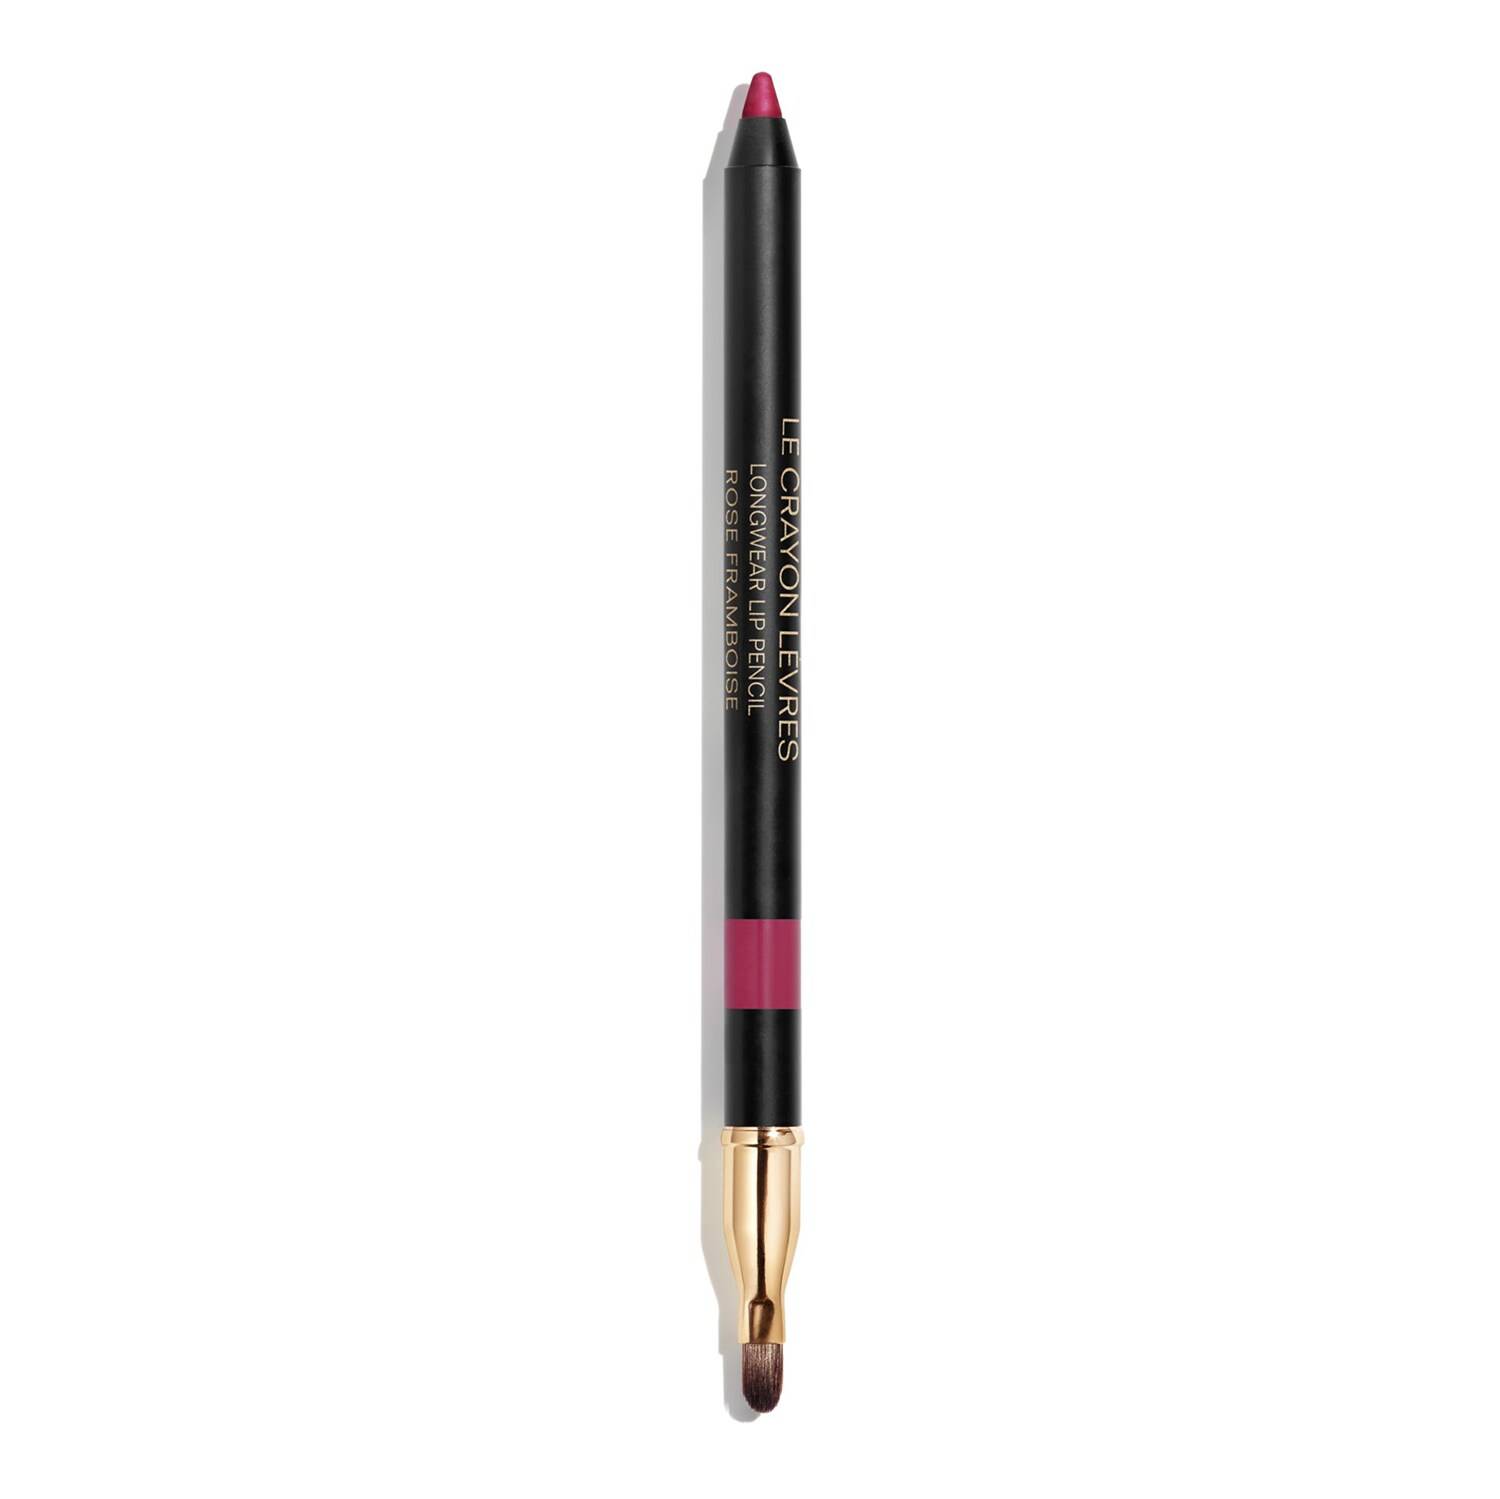 Chanel Le Crayon Levres - Longwear Lip Pencil 182 Rose Framboise